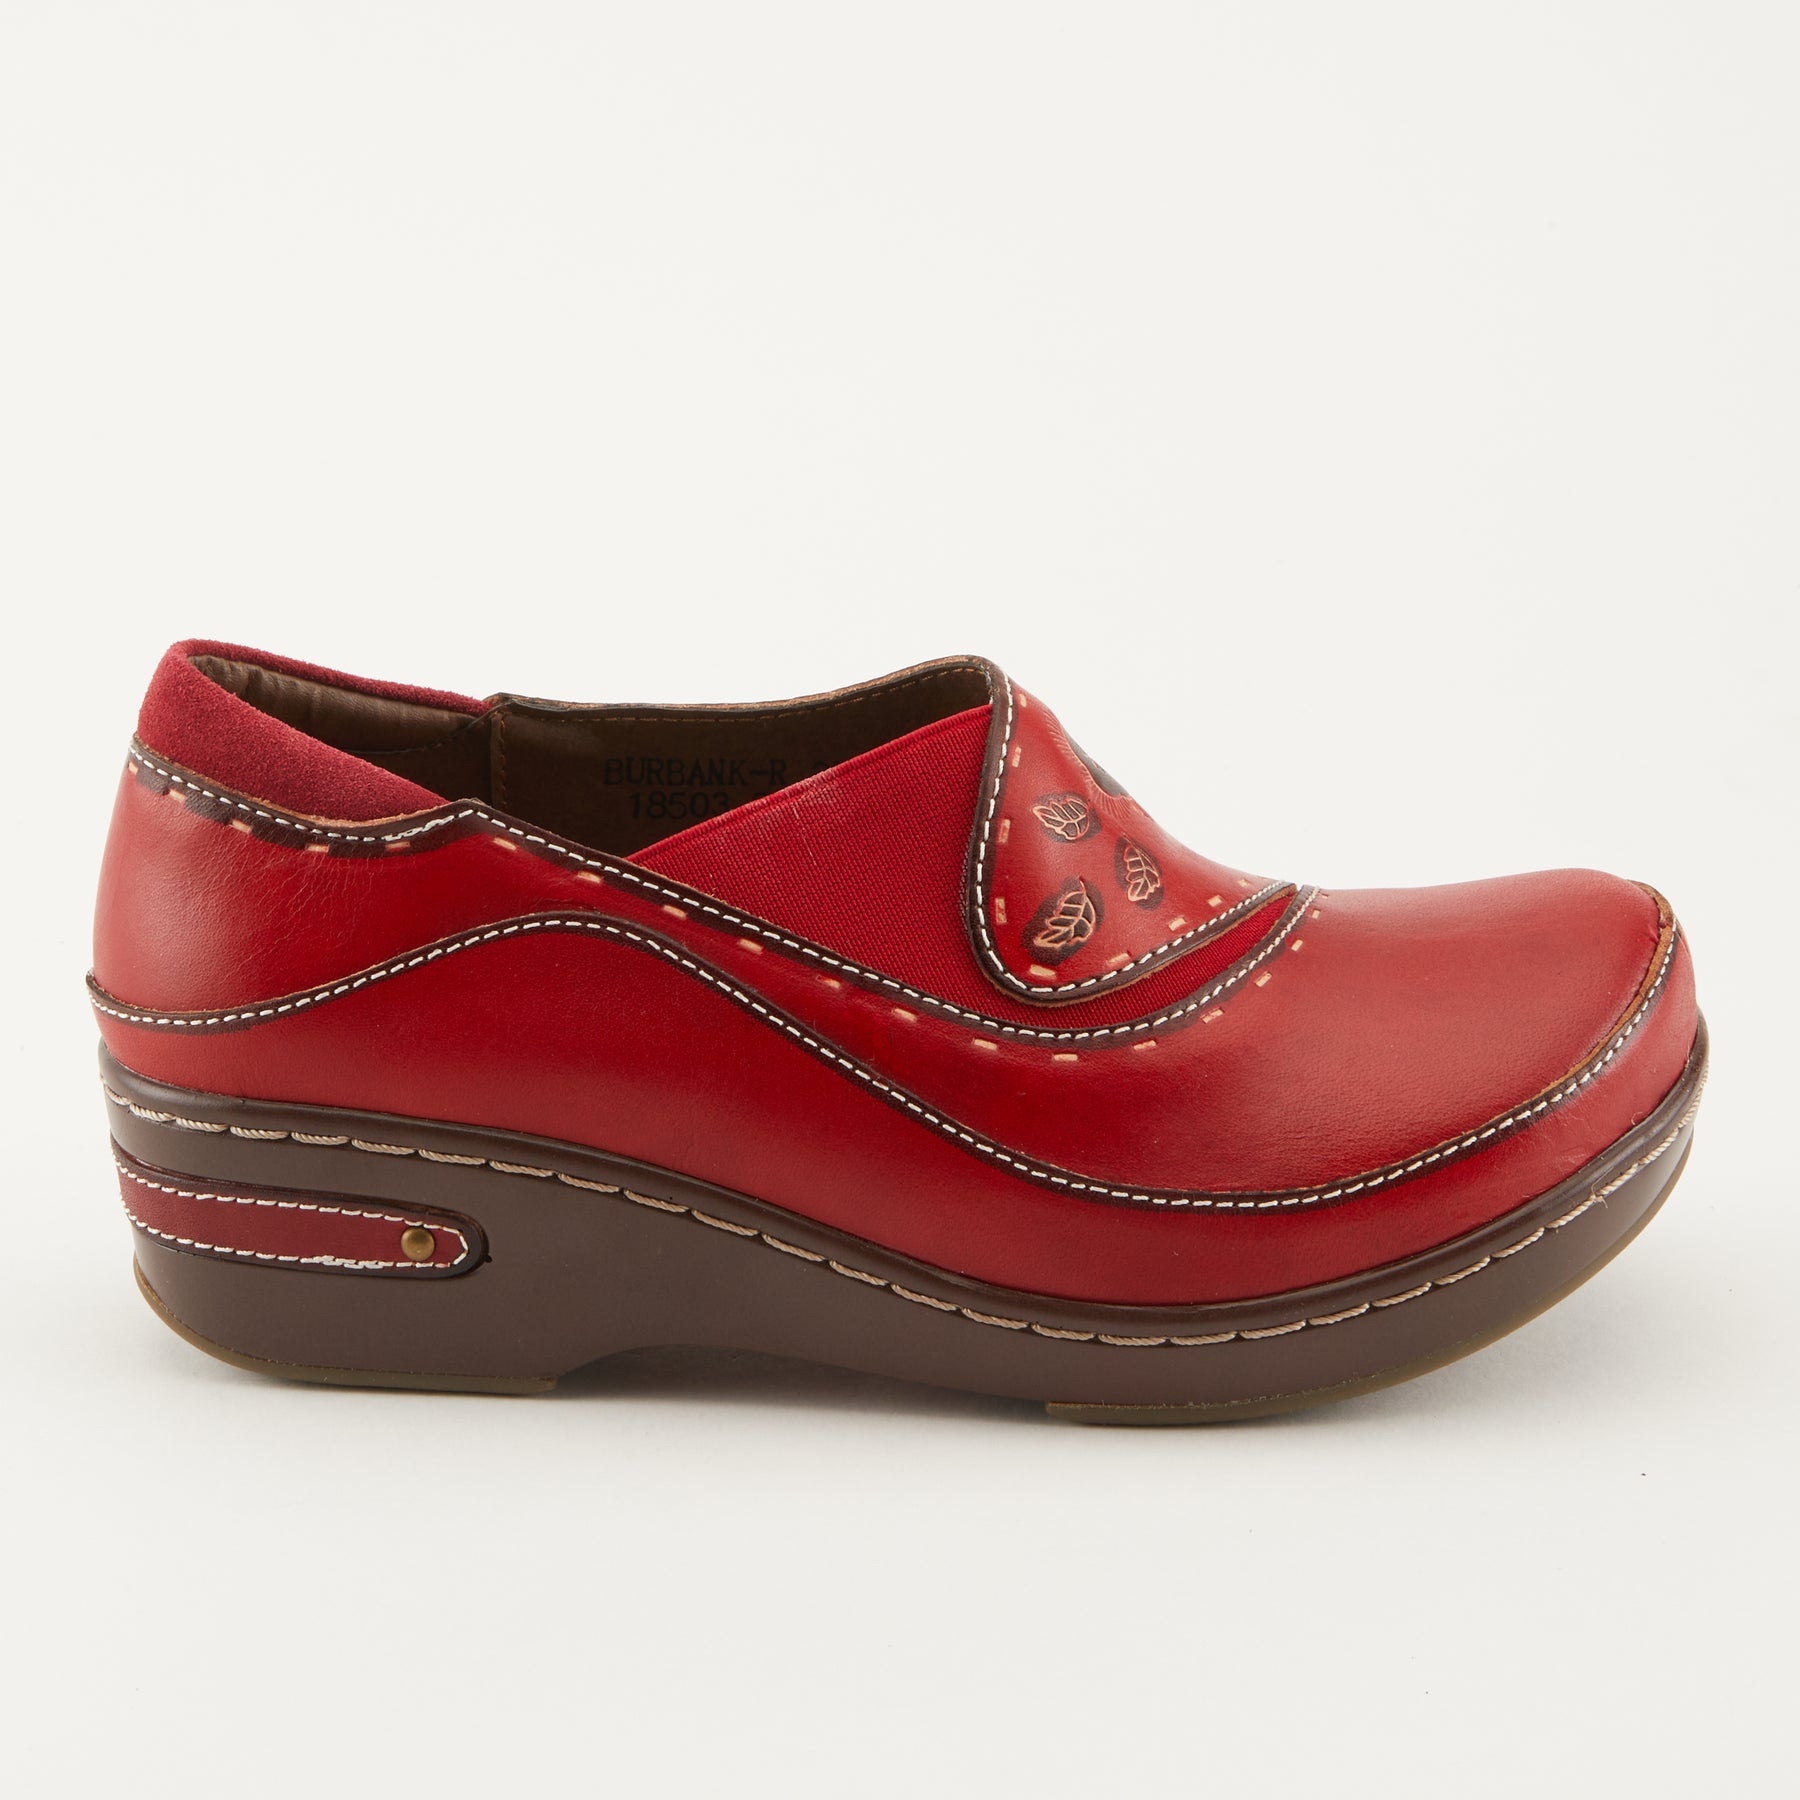 BURBANK SLIP-ON SHOE by L'ARTISTE – Spring Step Shoes